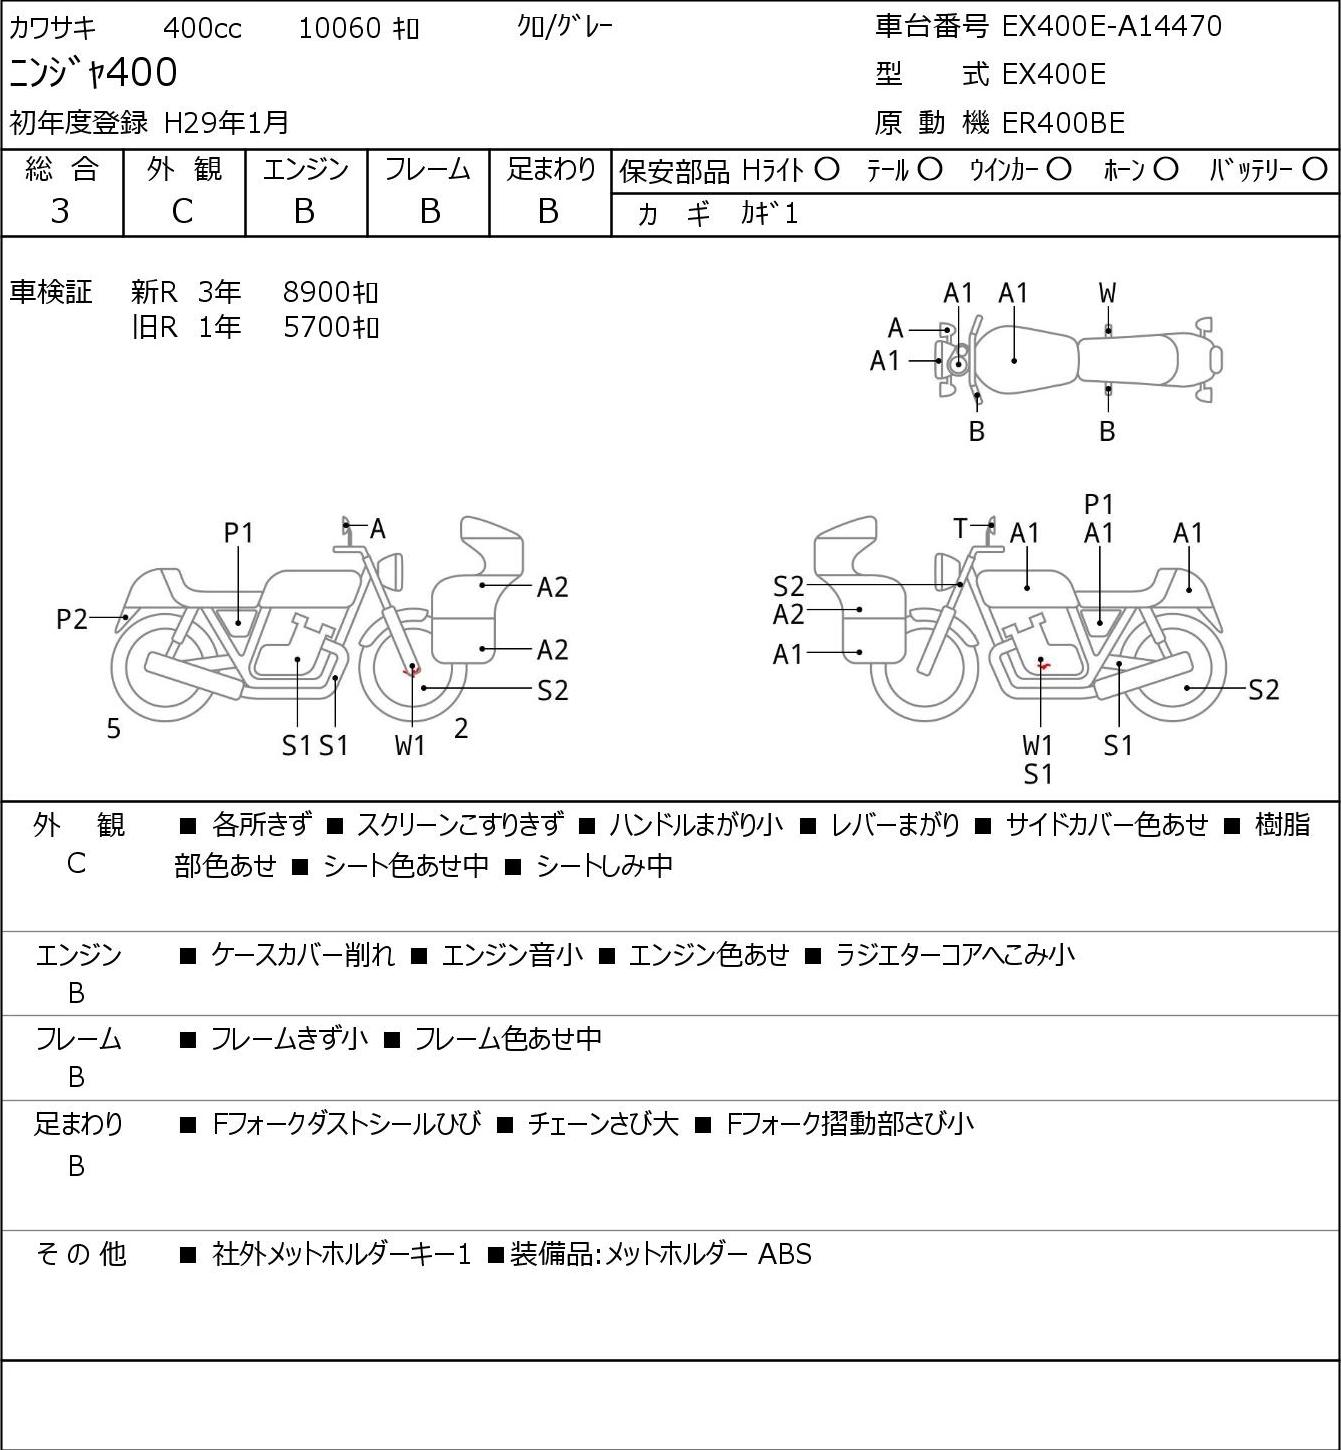 Kawasaki NINJA 400 EX400E - купить недорого